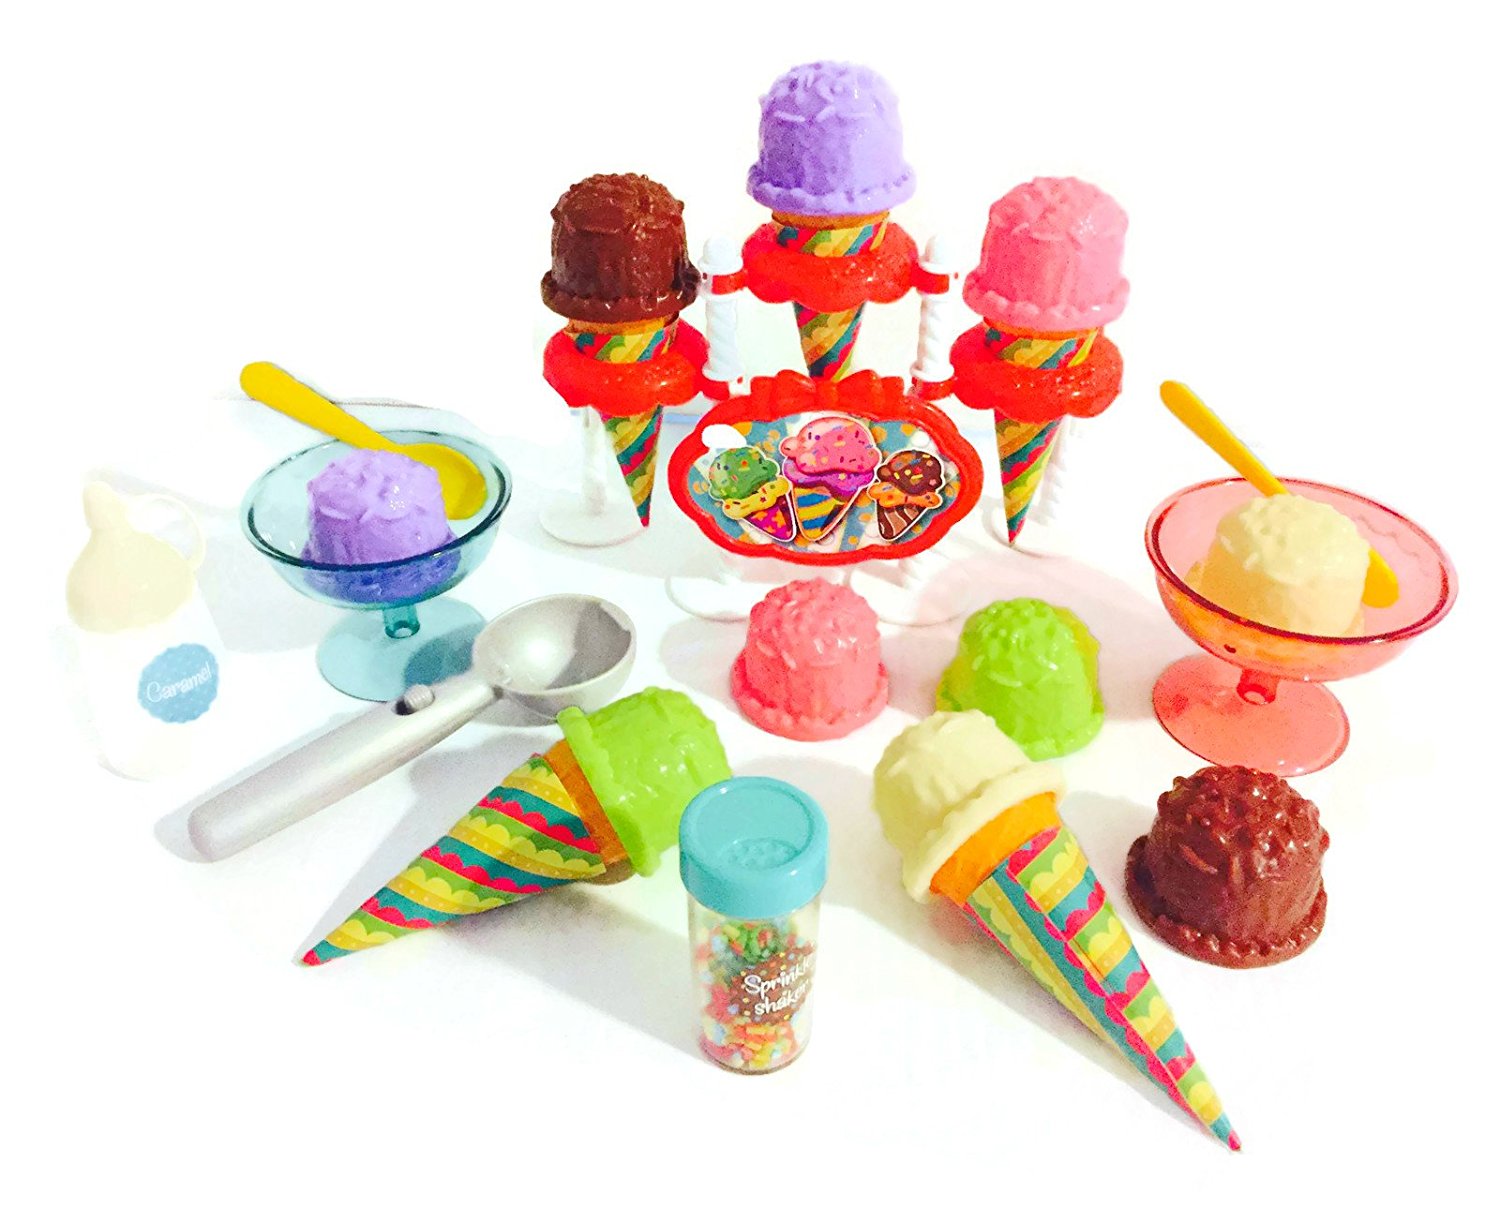 ice cream parlor toy set